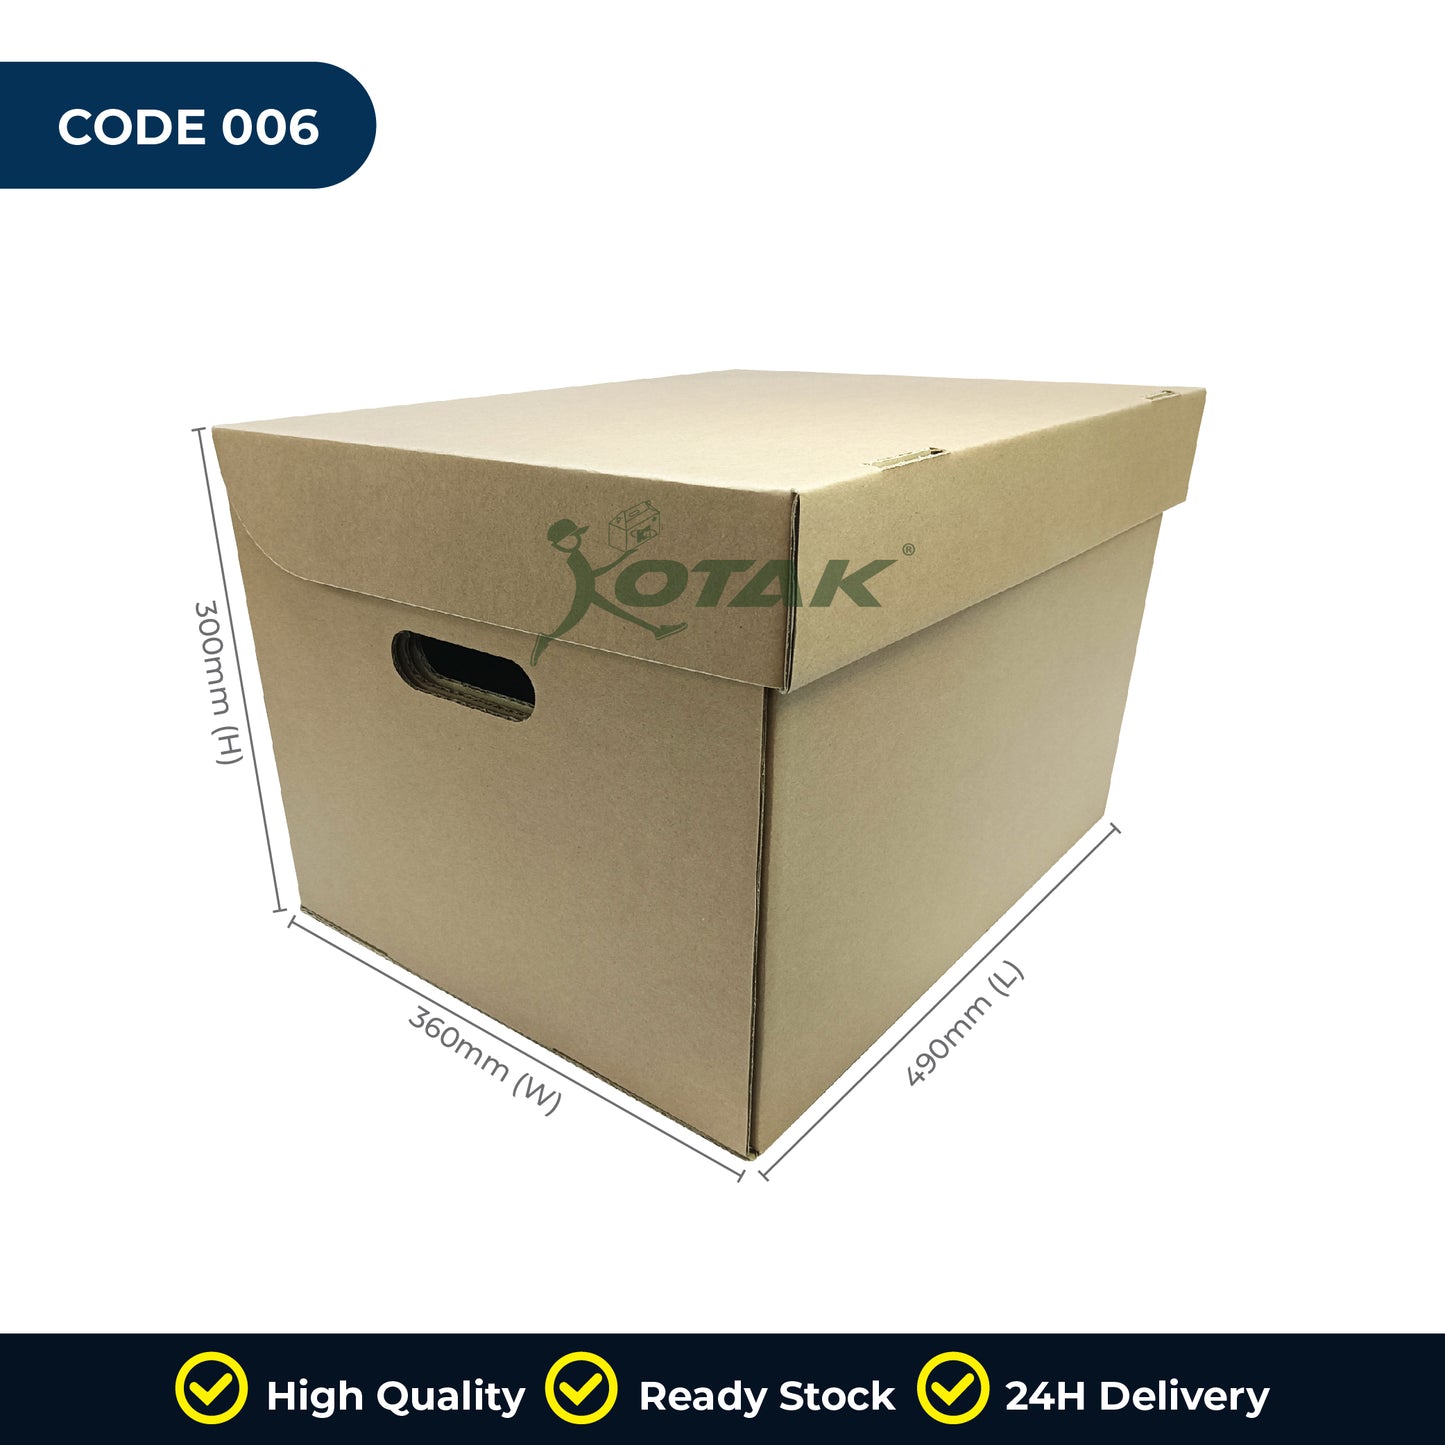 Storage Box / Document Box